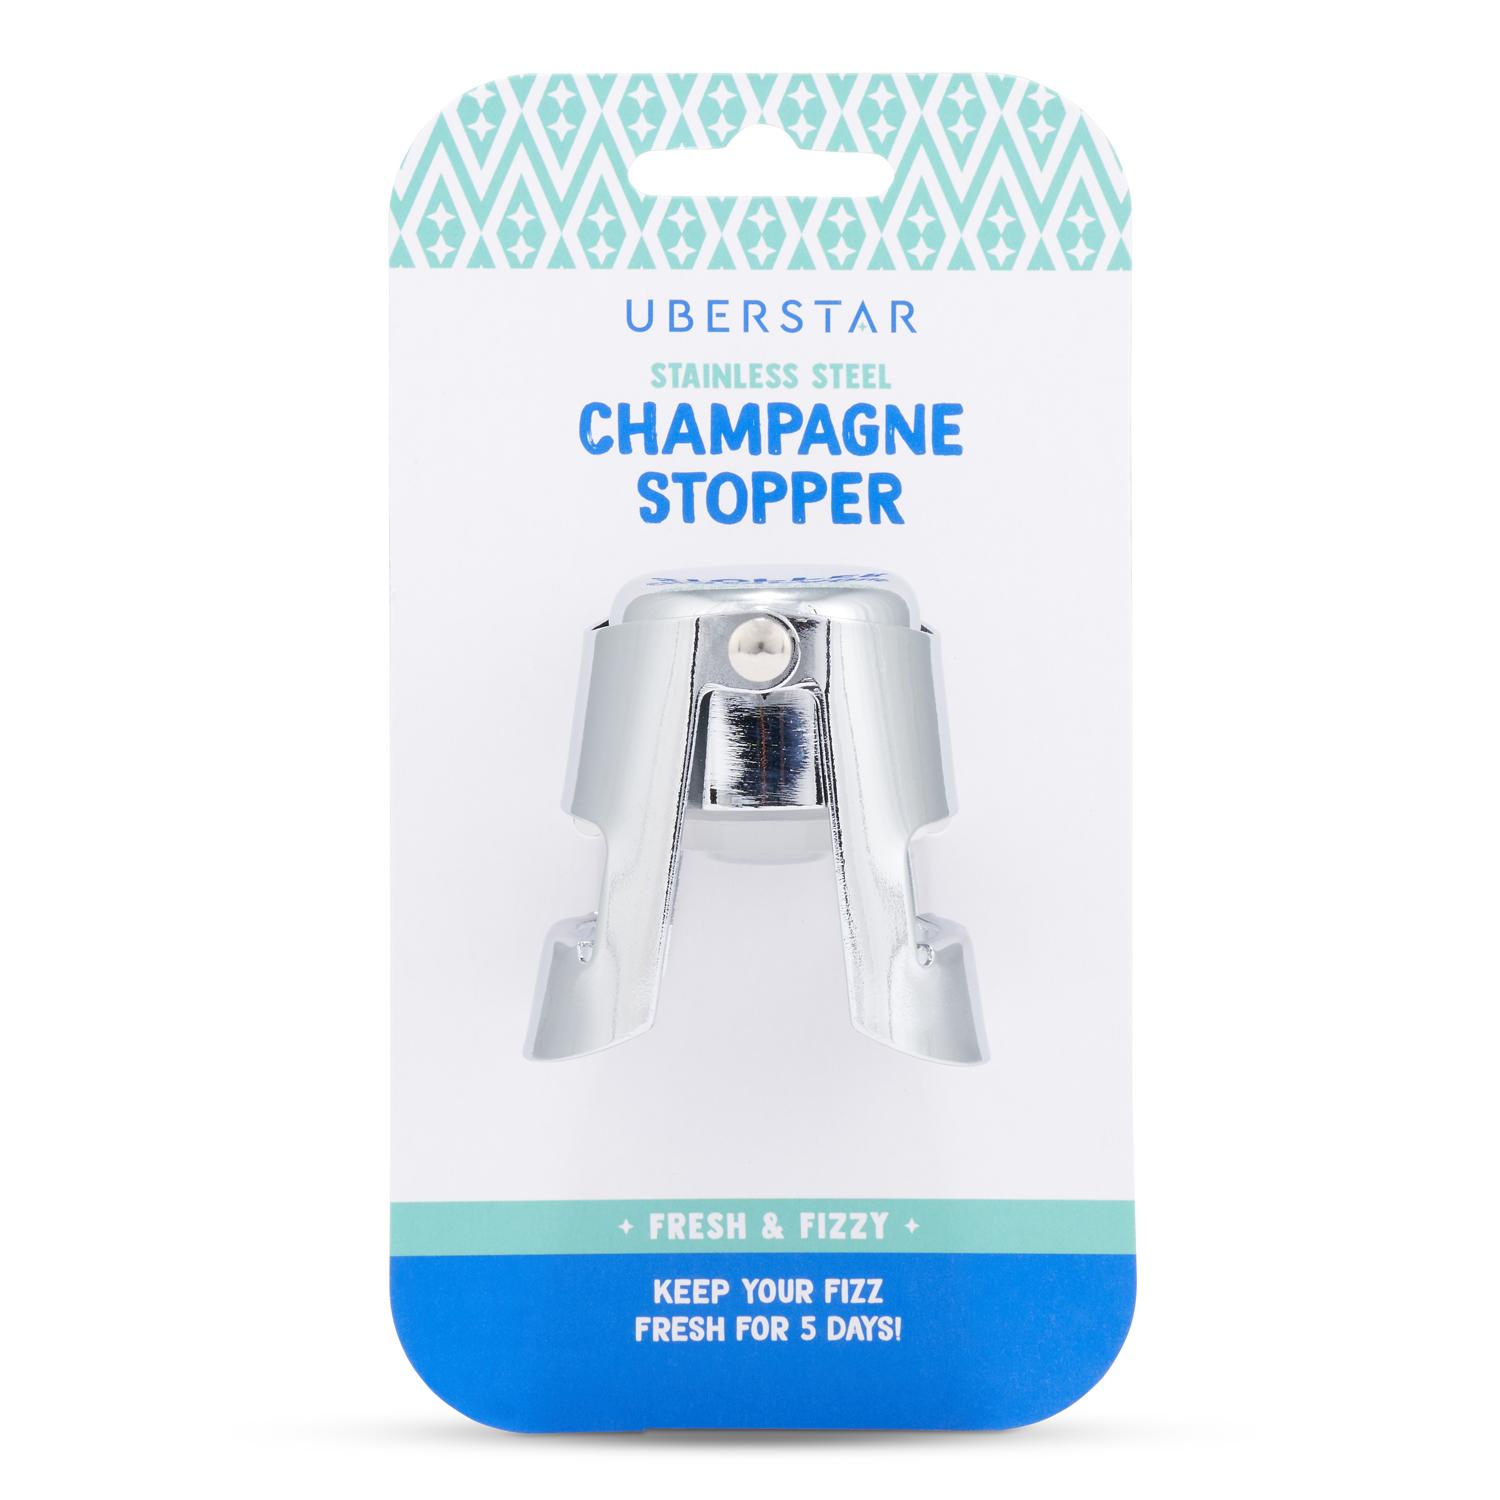 Uberstar Champagne Stopper - Silver £6.99